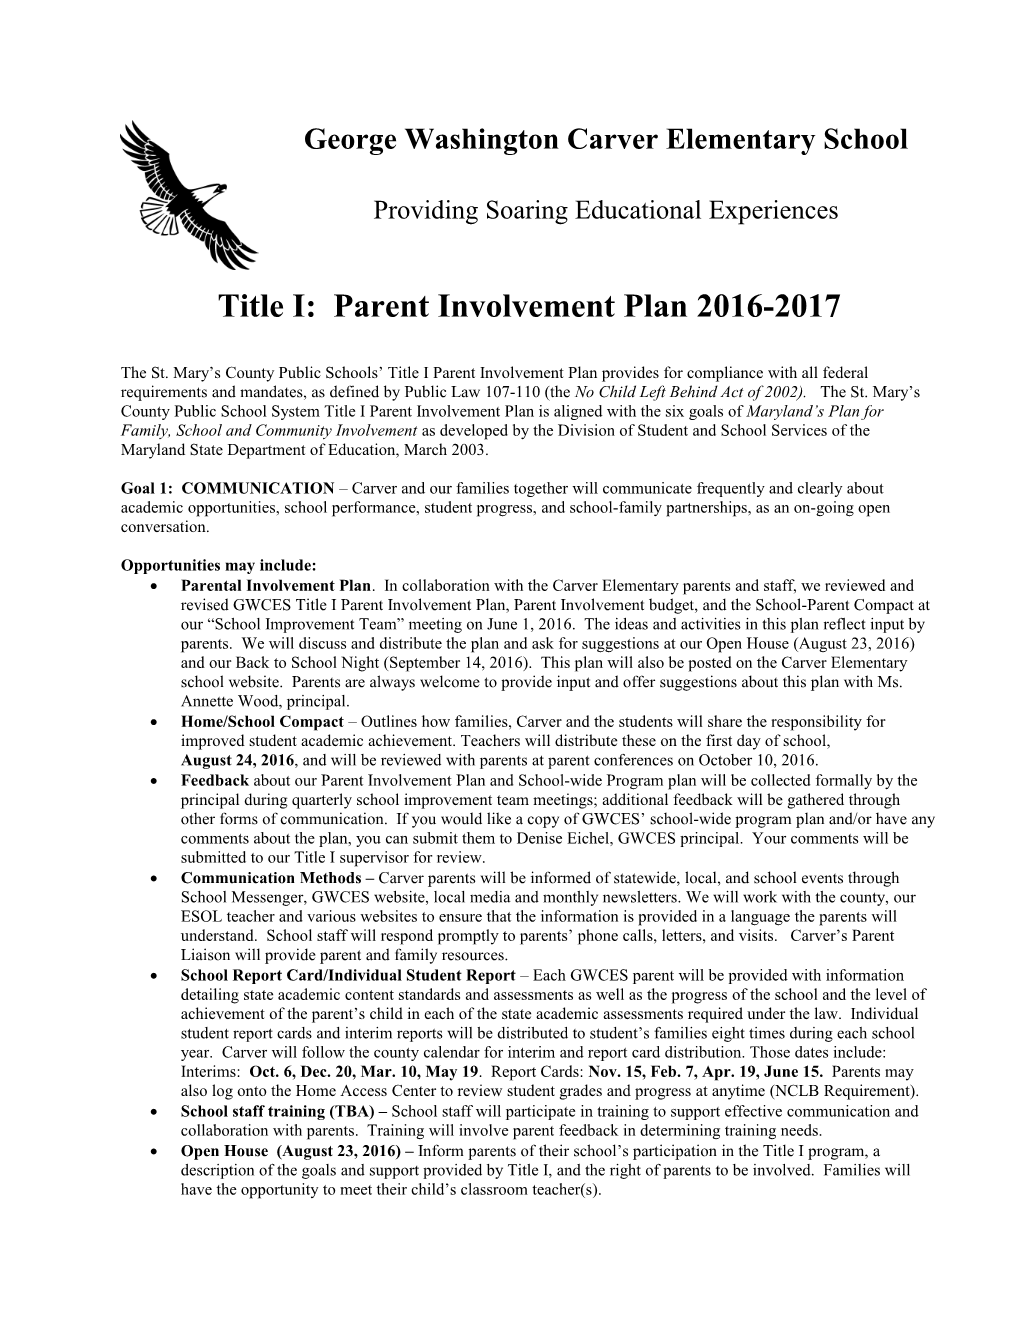 Title I: Parent Involvement Plan 2016-2017